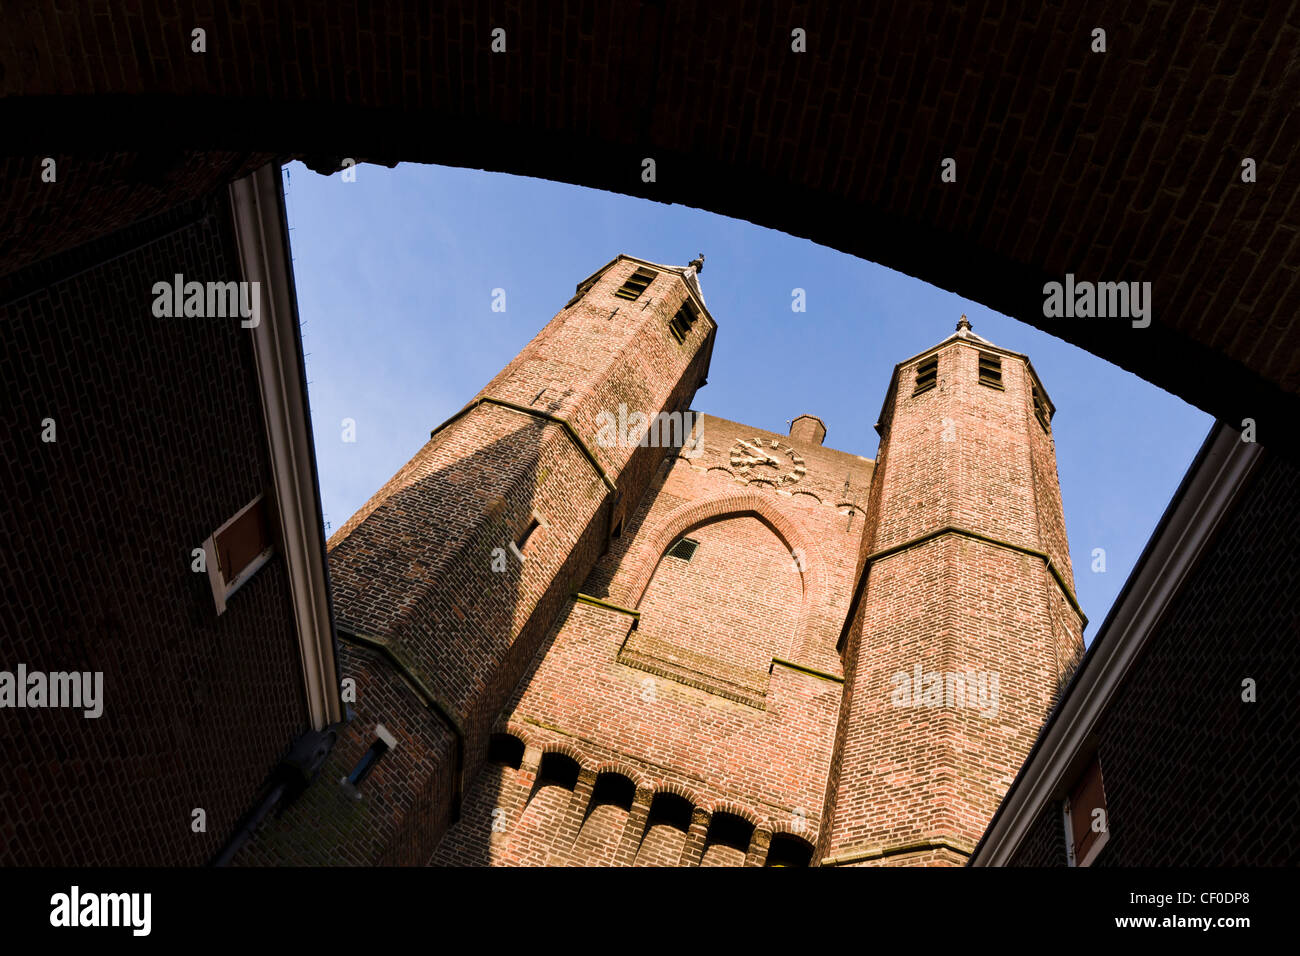 Amsterdamse Poort porte de ville à Haarlem, Pays-Bas Banque D'Images